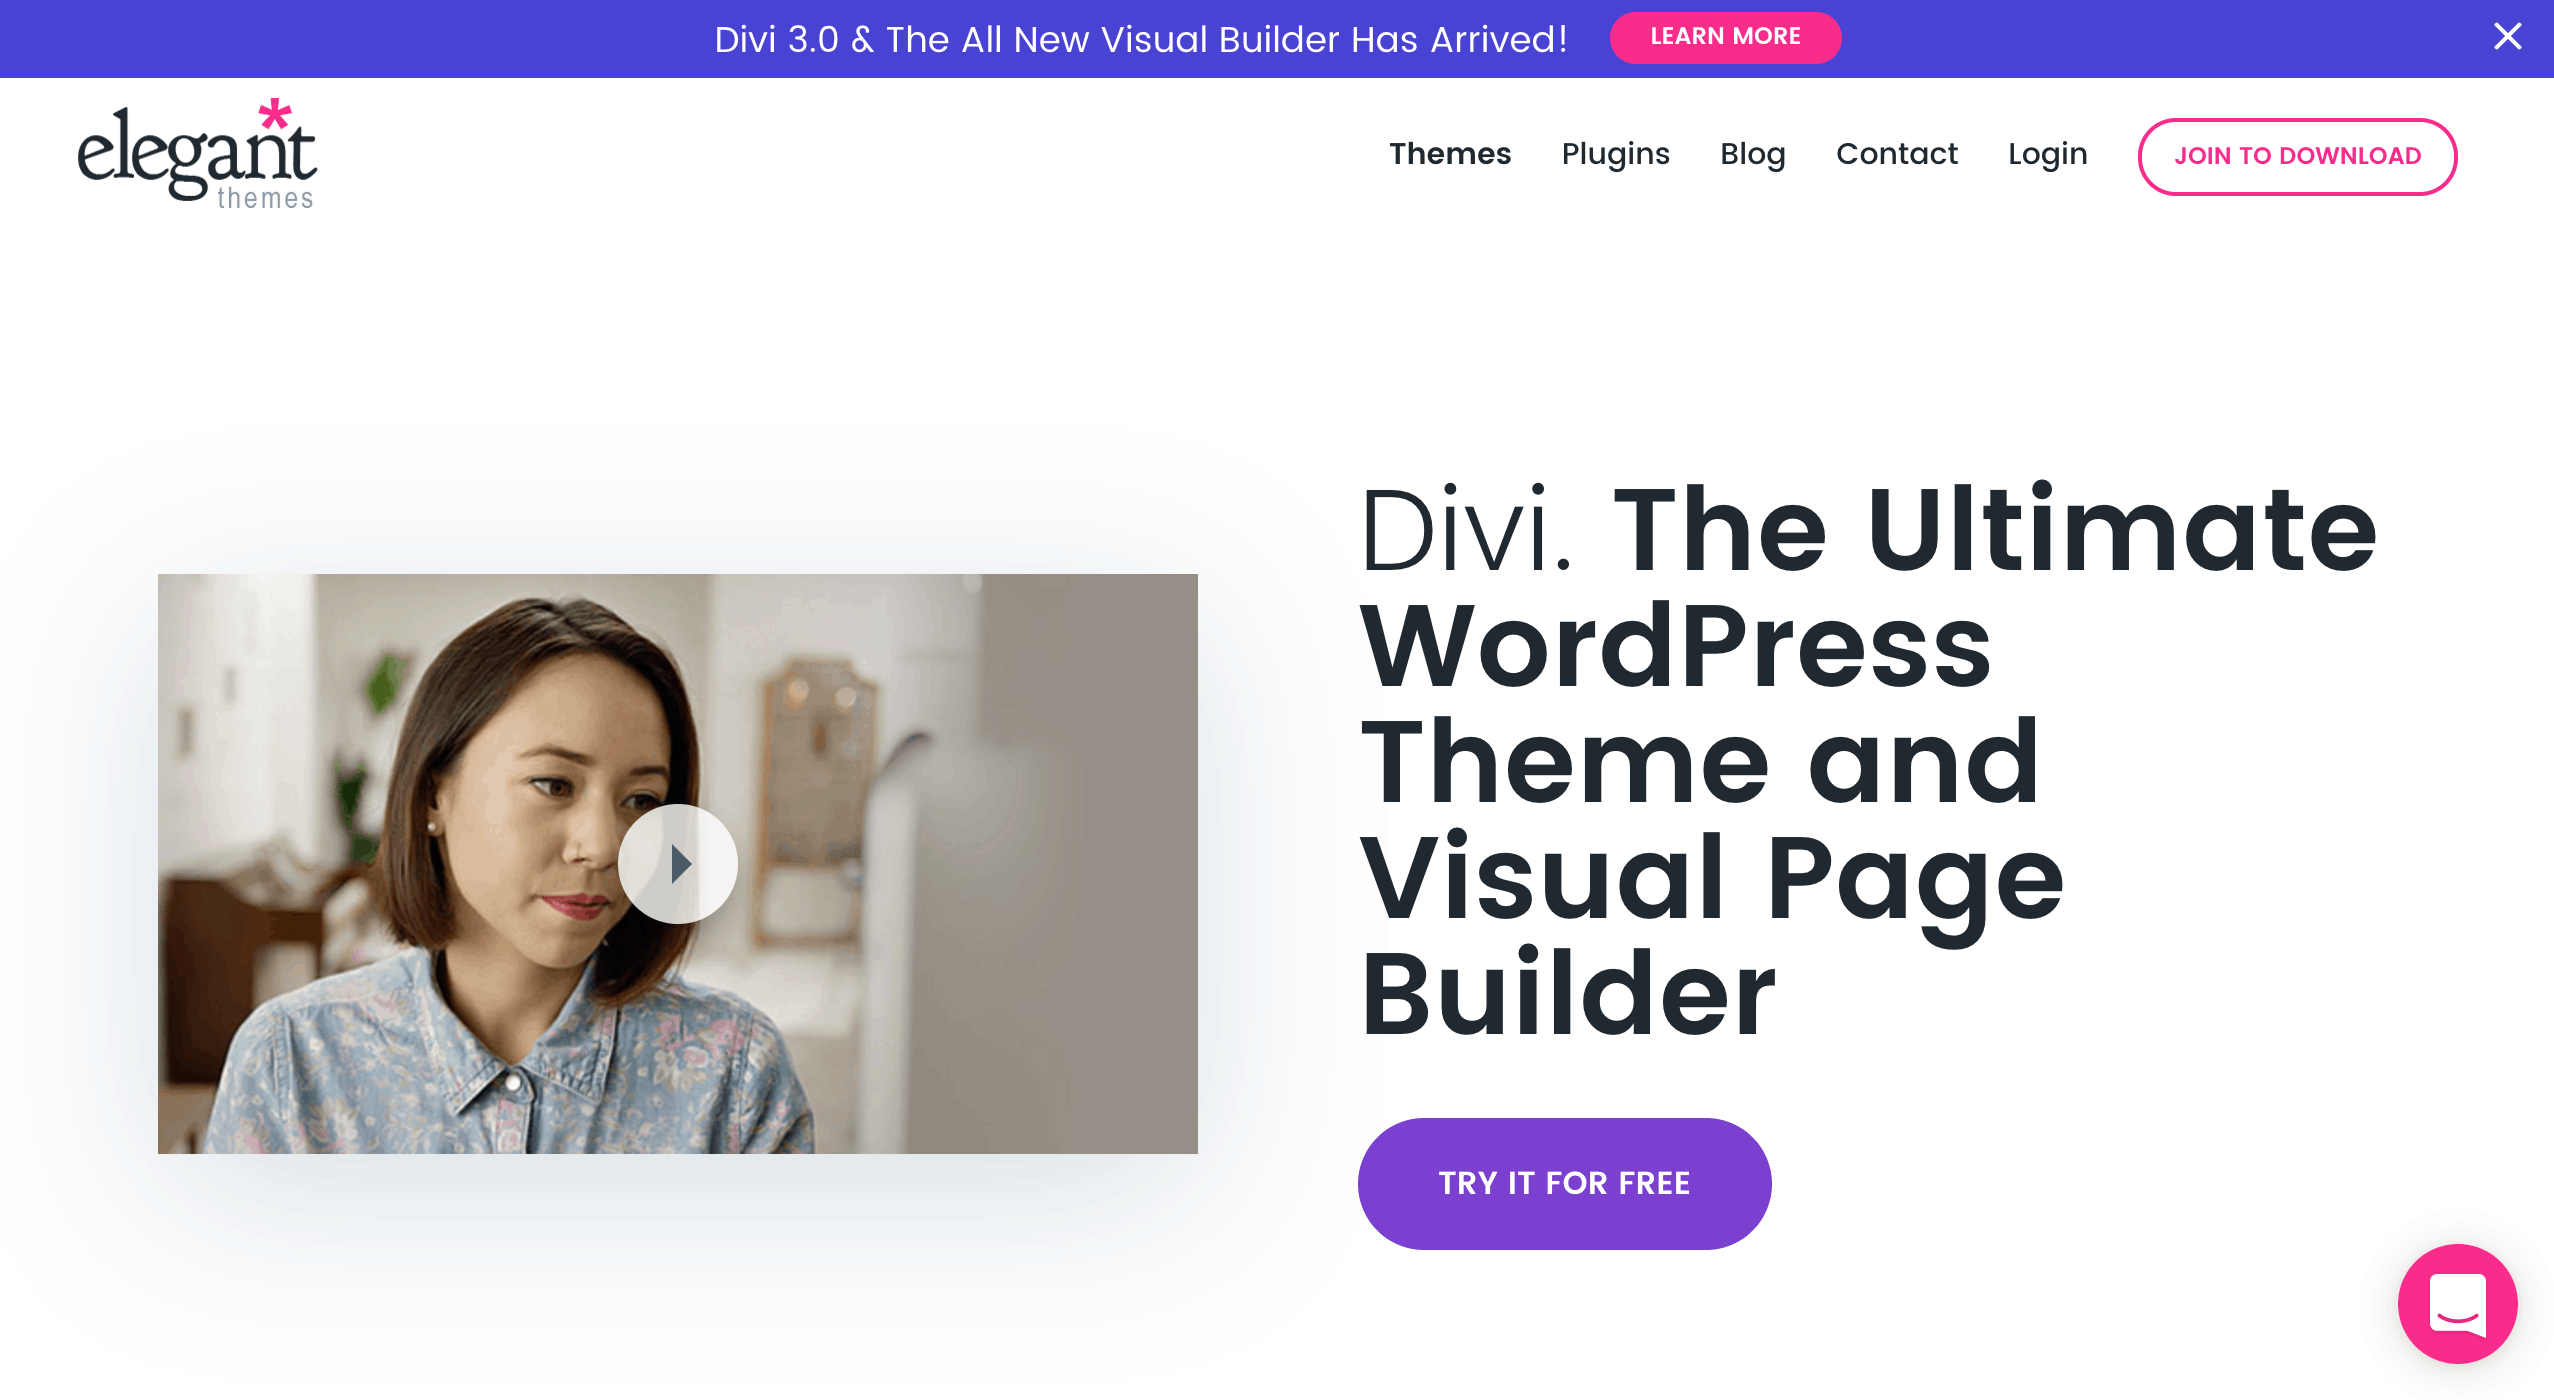 The Divi Theme for WordPress